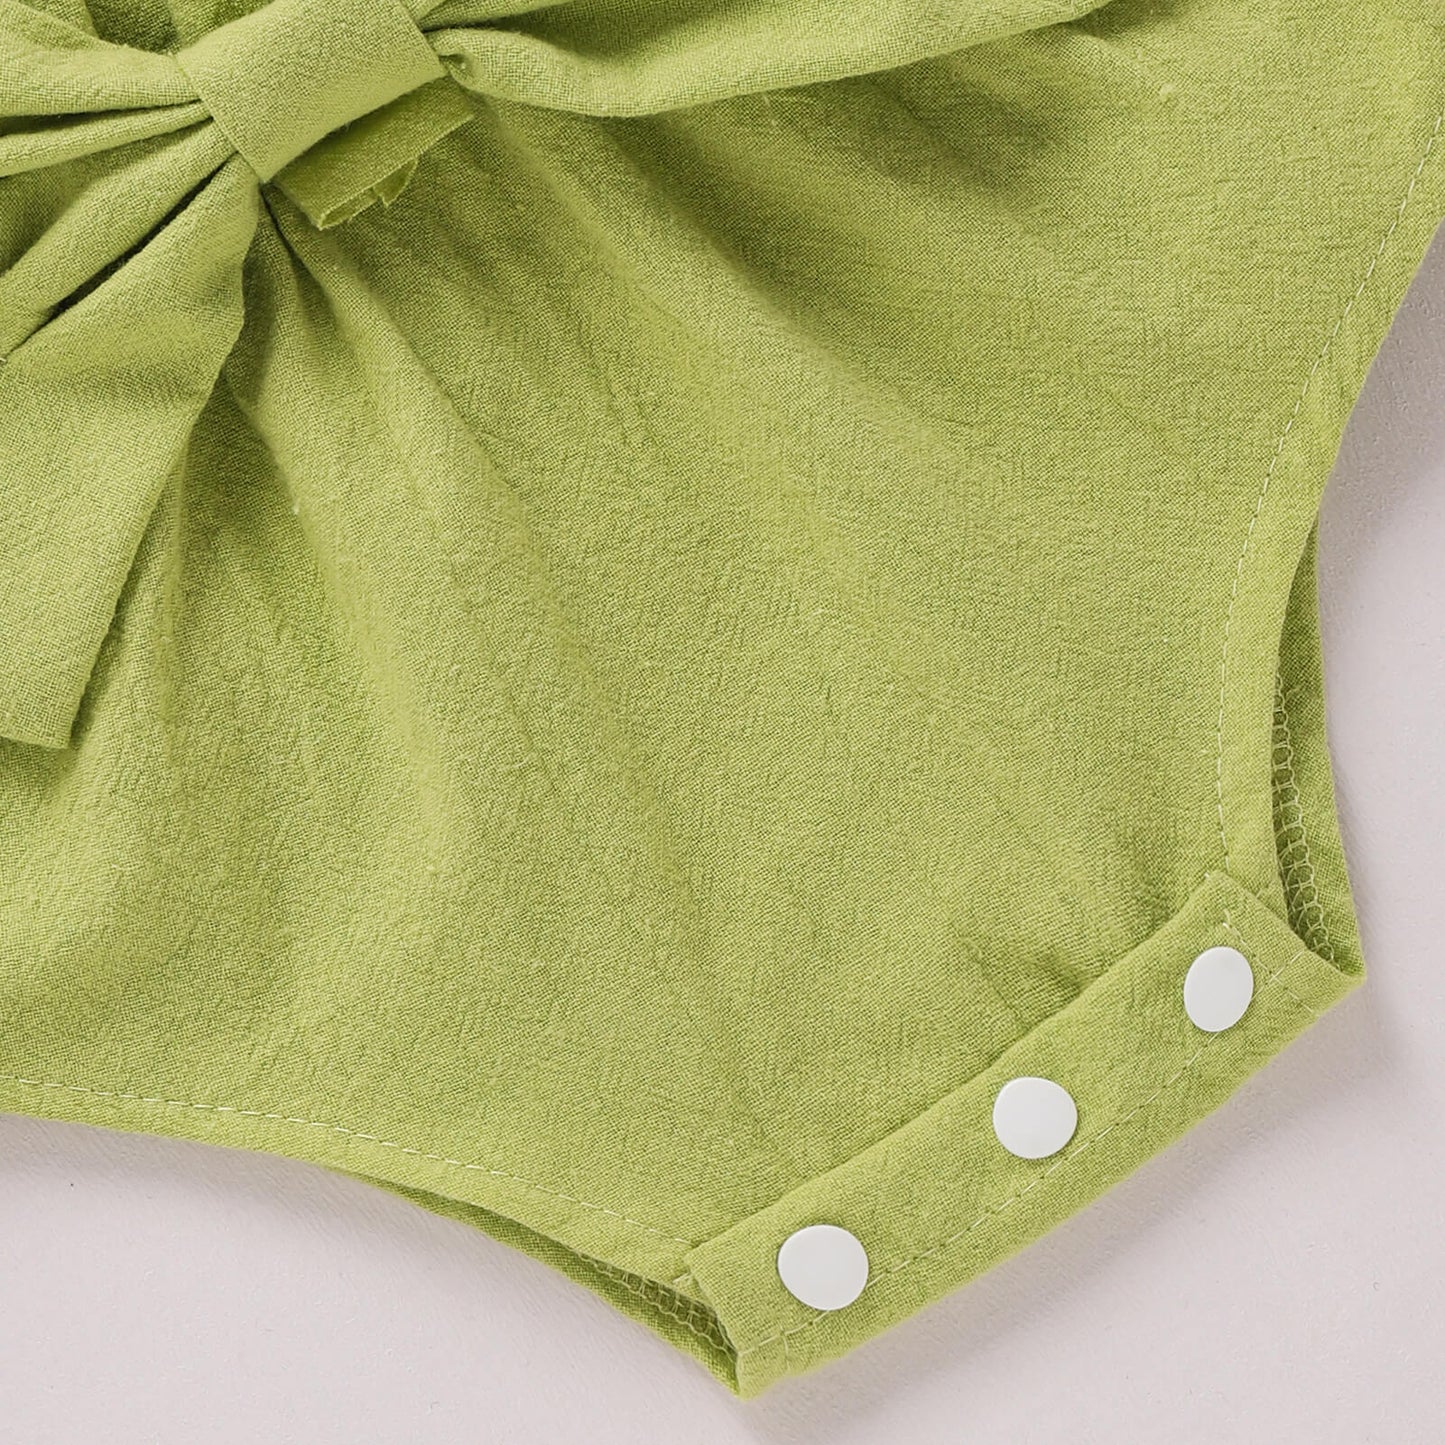 Baby Girl Lime Color Bow Detail Flounce Sleeve Bodysuit